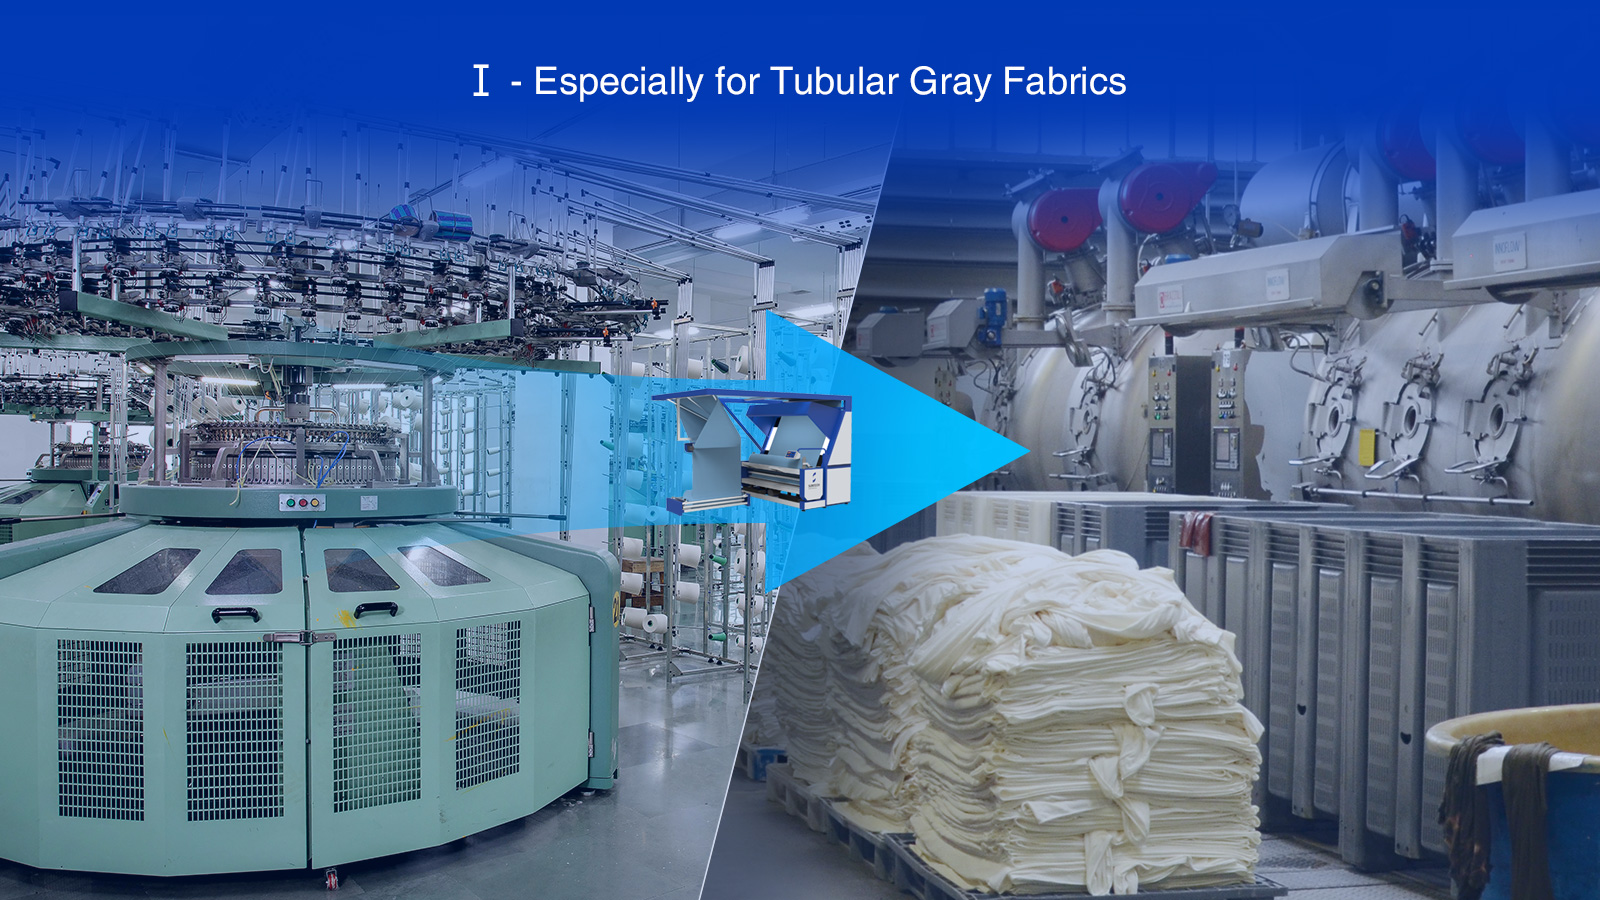 Gray Fabric Slitting & Inspection Machine Is Especially For Tubular Gray Fabrics